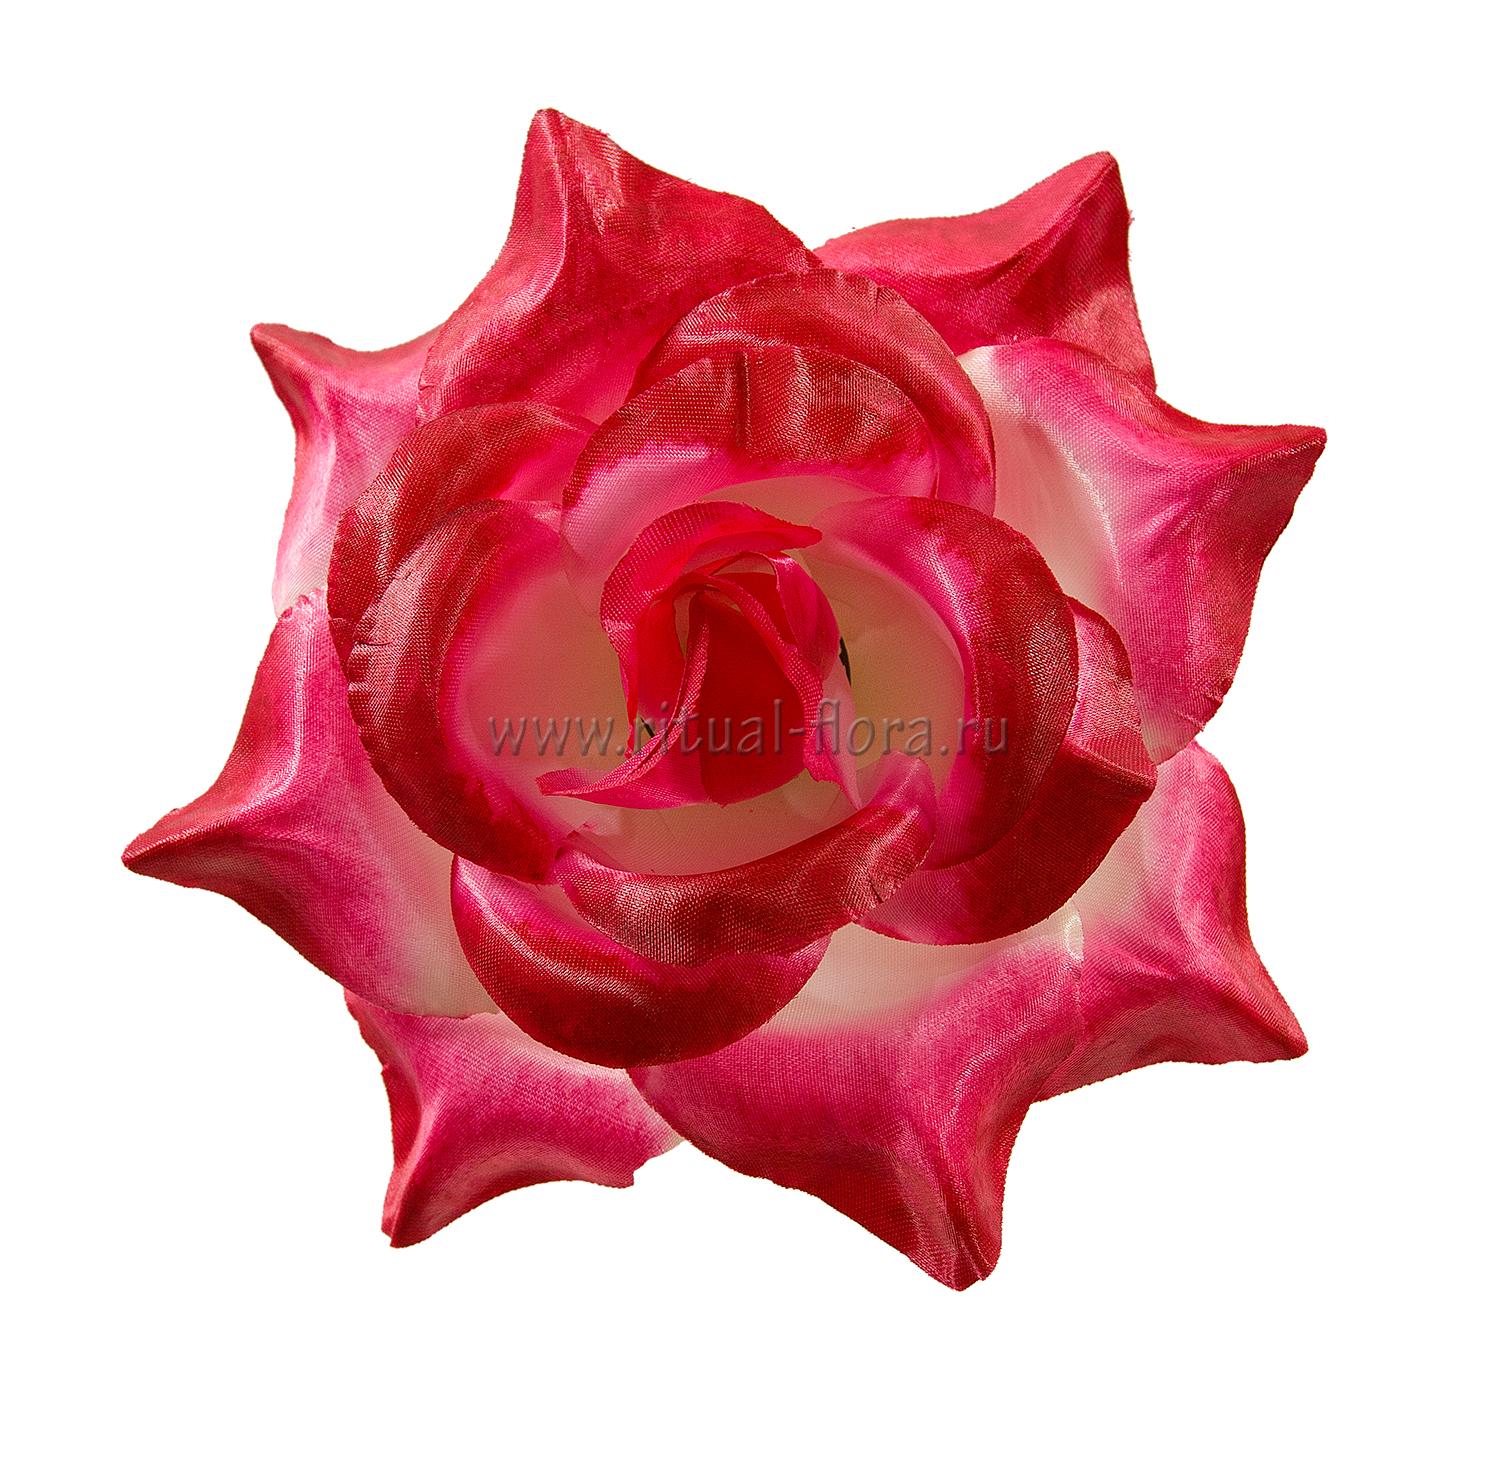 Роза Санни атлас d-22 см, ГУ10-92Р (розовая)